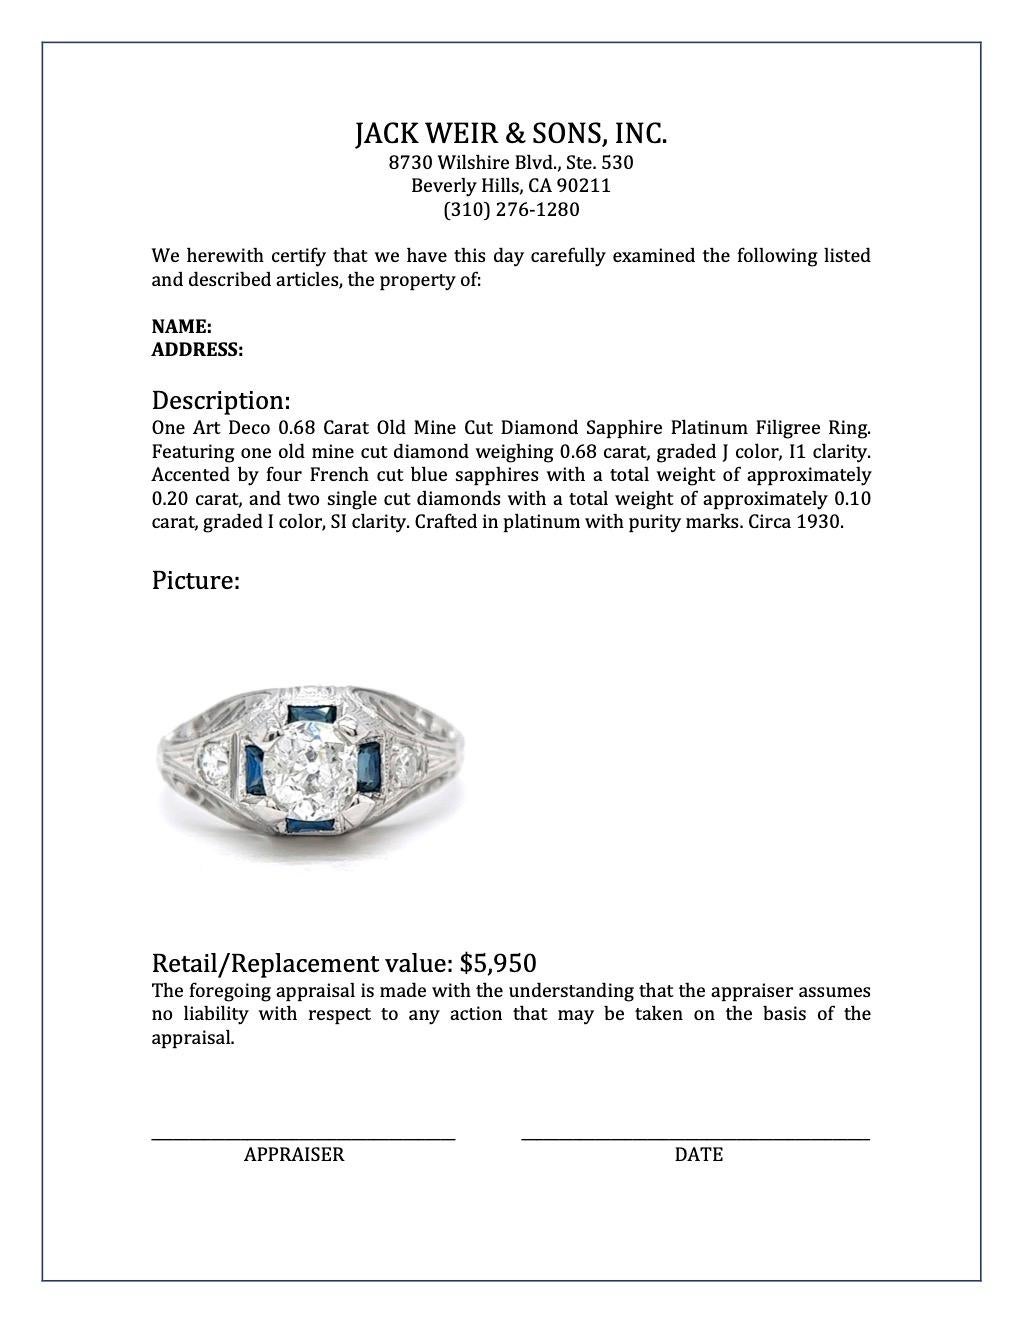 Art Deco 0.68 Carat Old Mine Cut Diamond Sapphire Platinum Filigree Ring 3